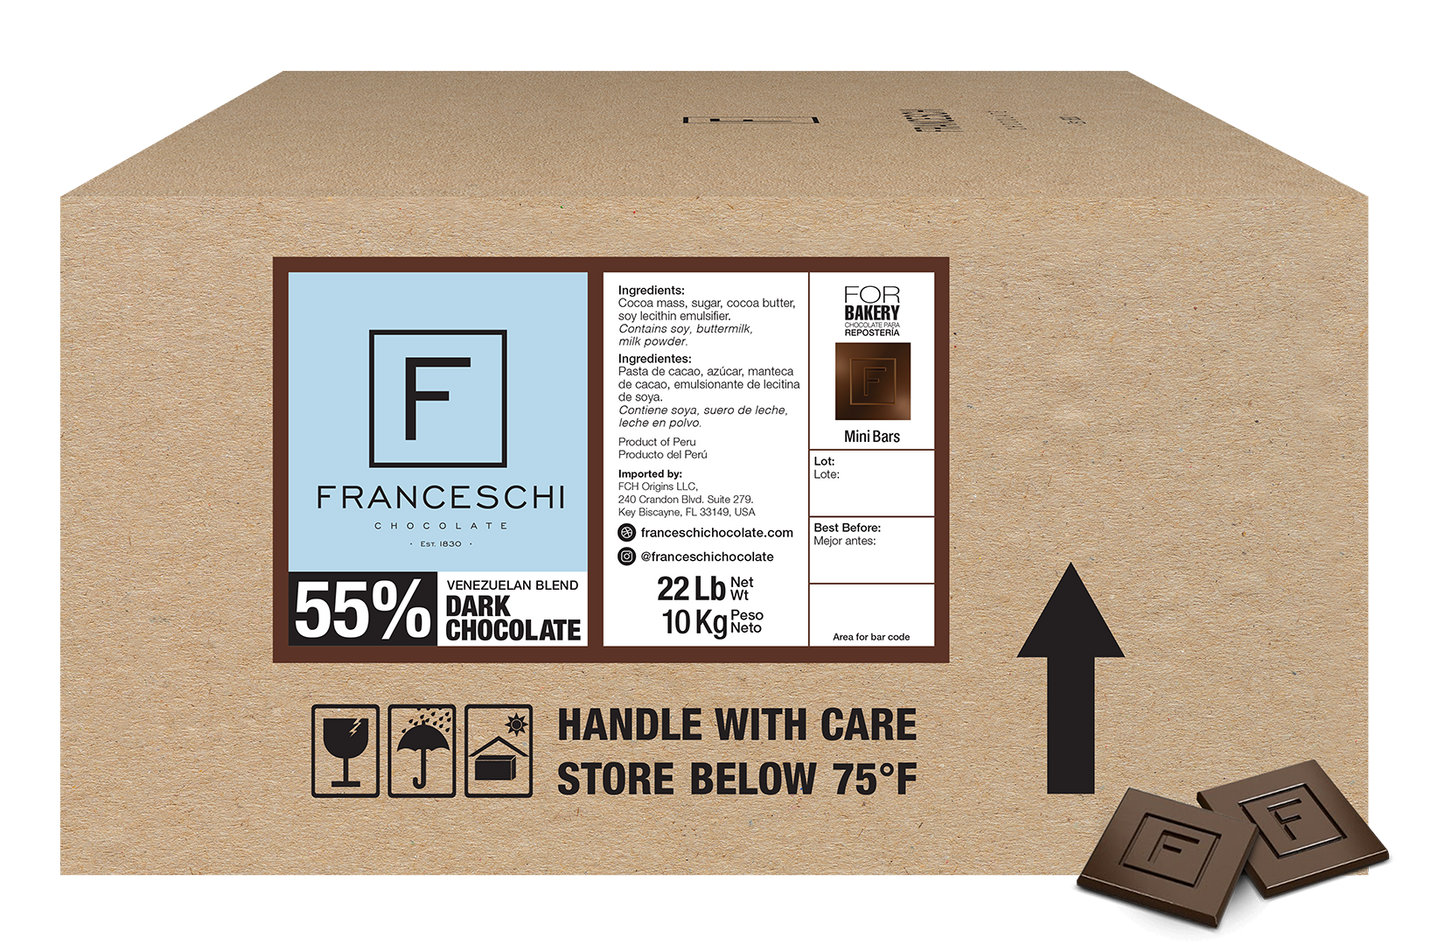 FRANCESCHI DARK CHOCOLATE VENEZUELAN BLEND 55%  Mini Bars 22 Lb.